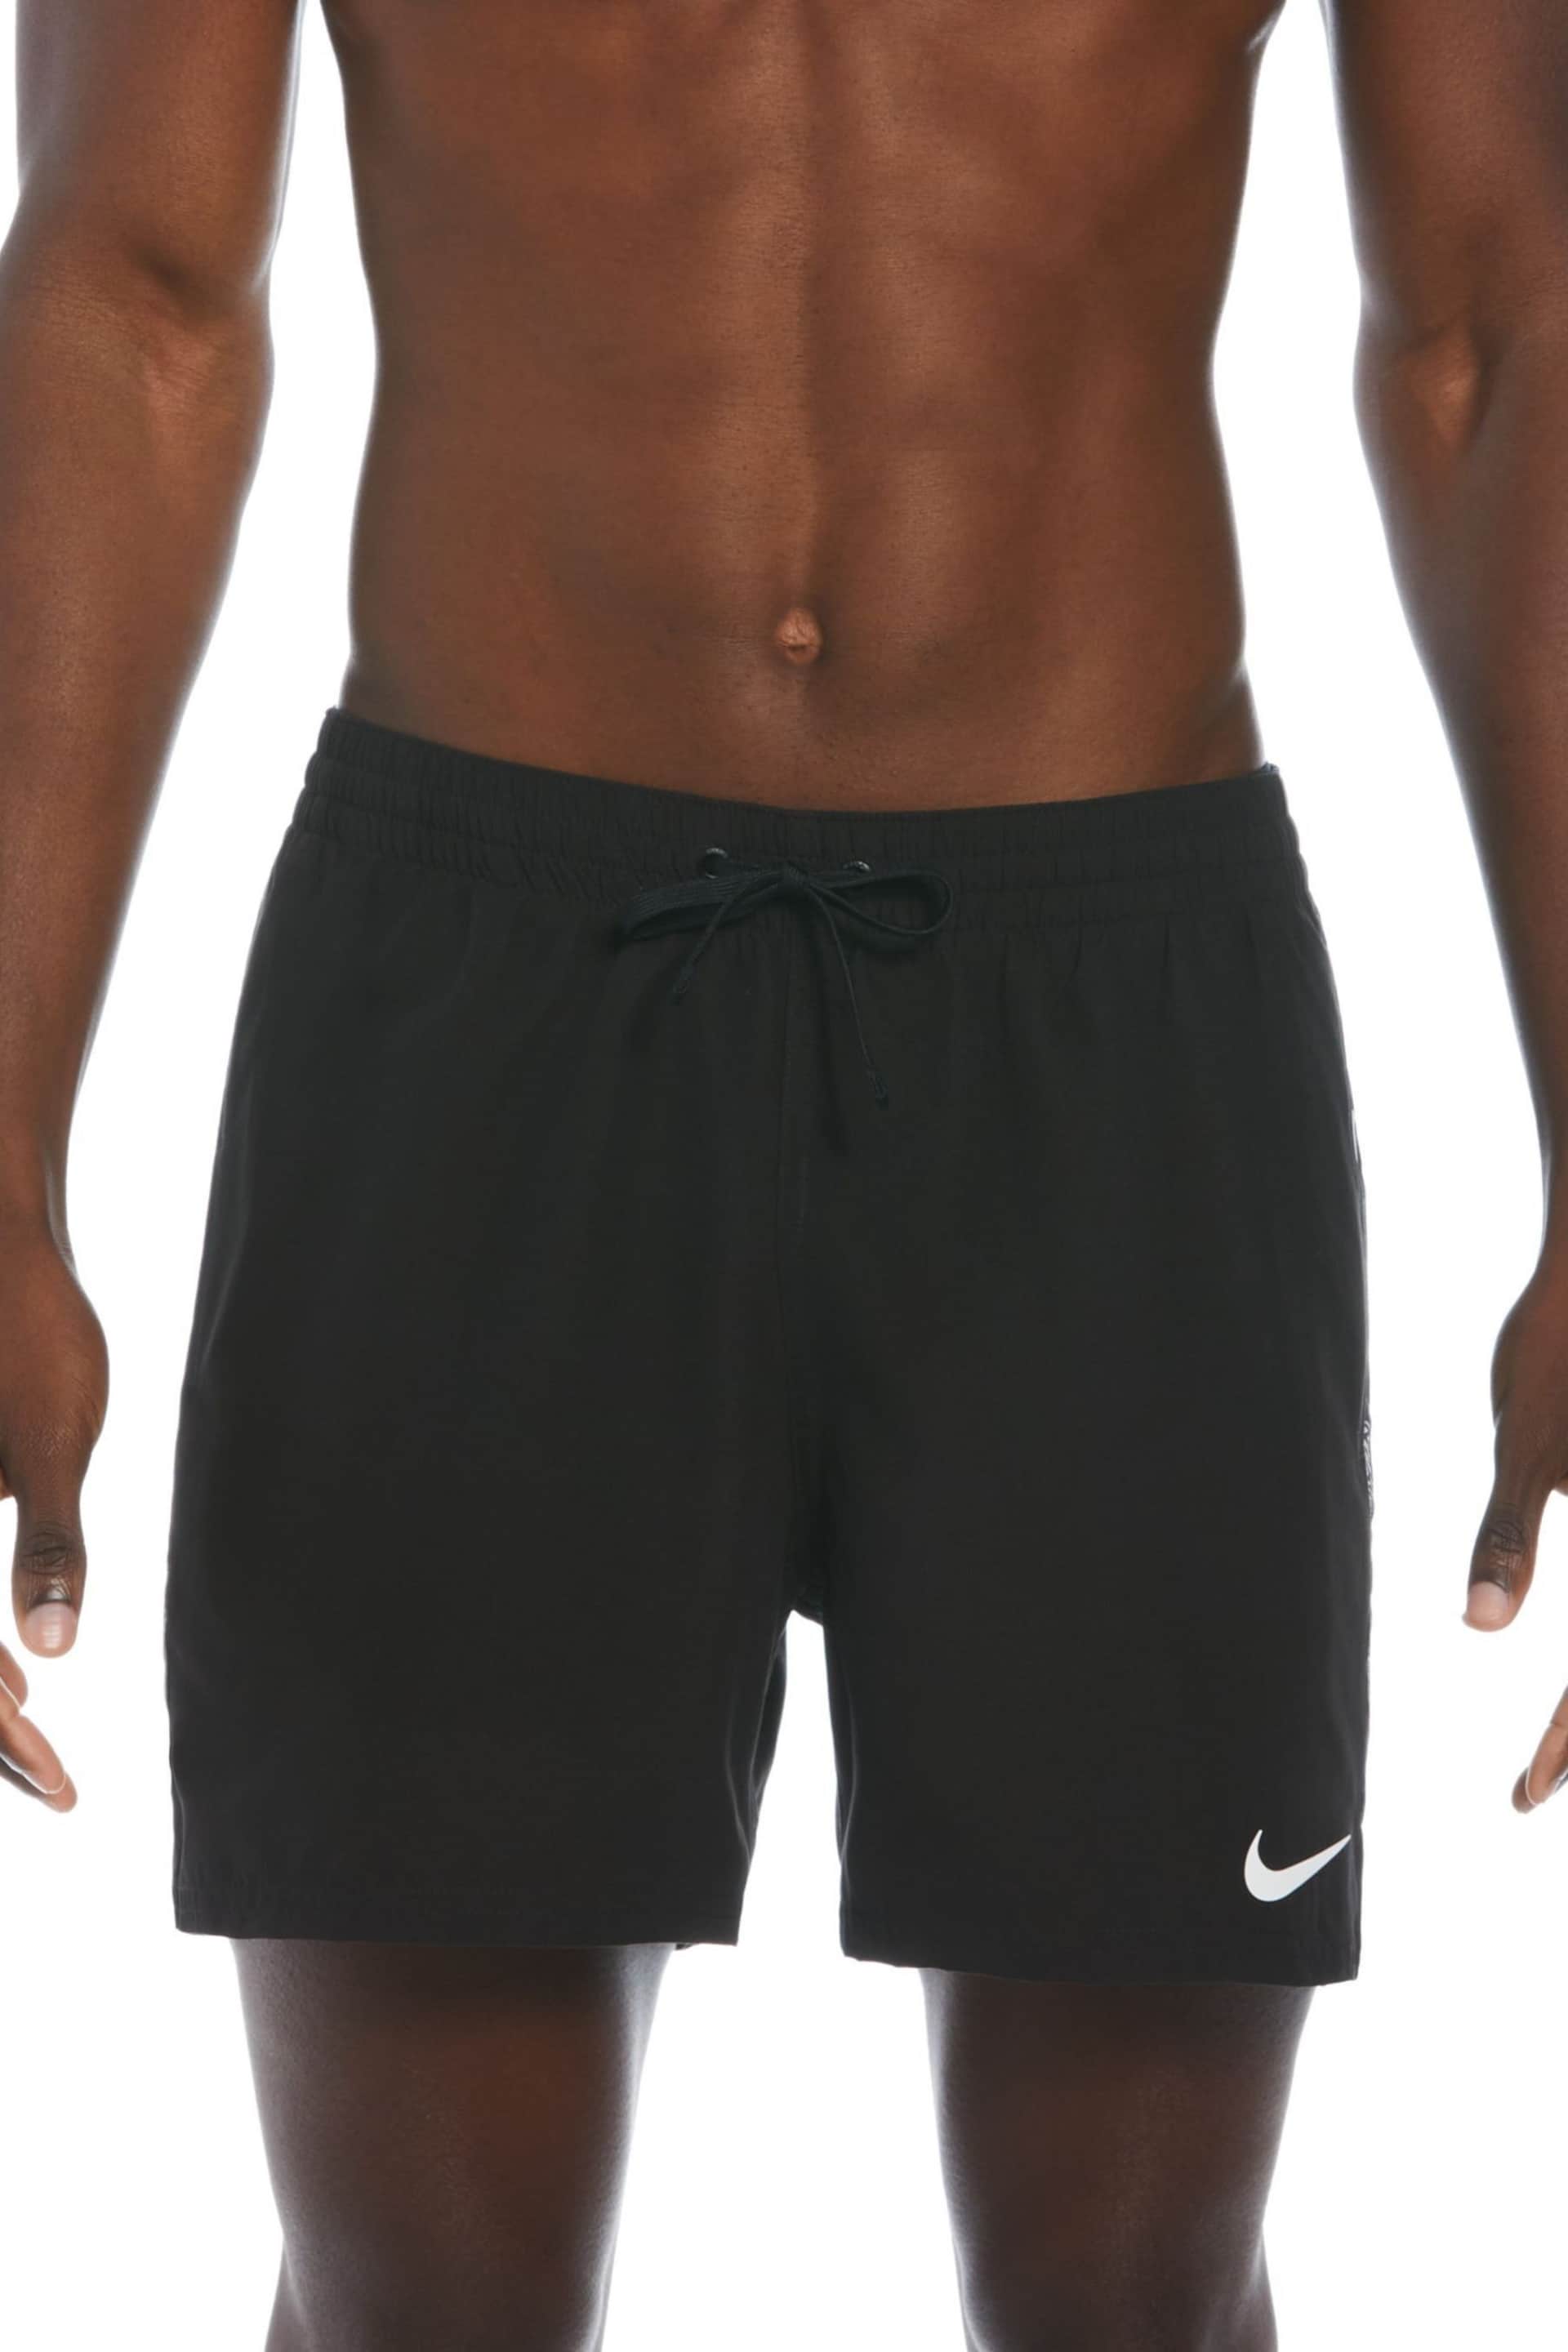 Nike Black 5 Inch Black Logo Tape Volley Swim Shorts - Image 2 of 8